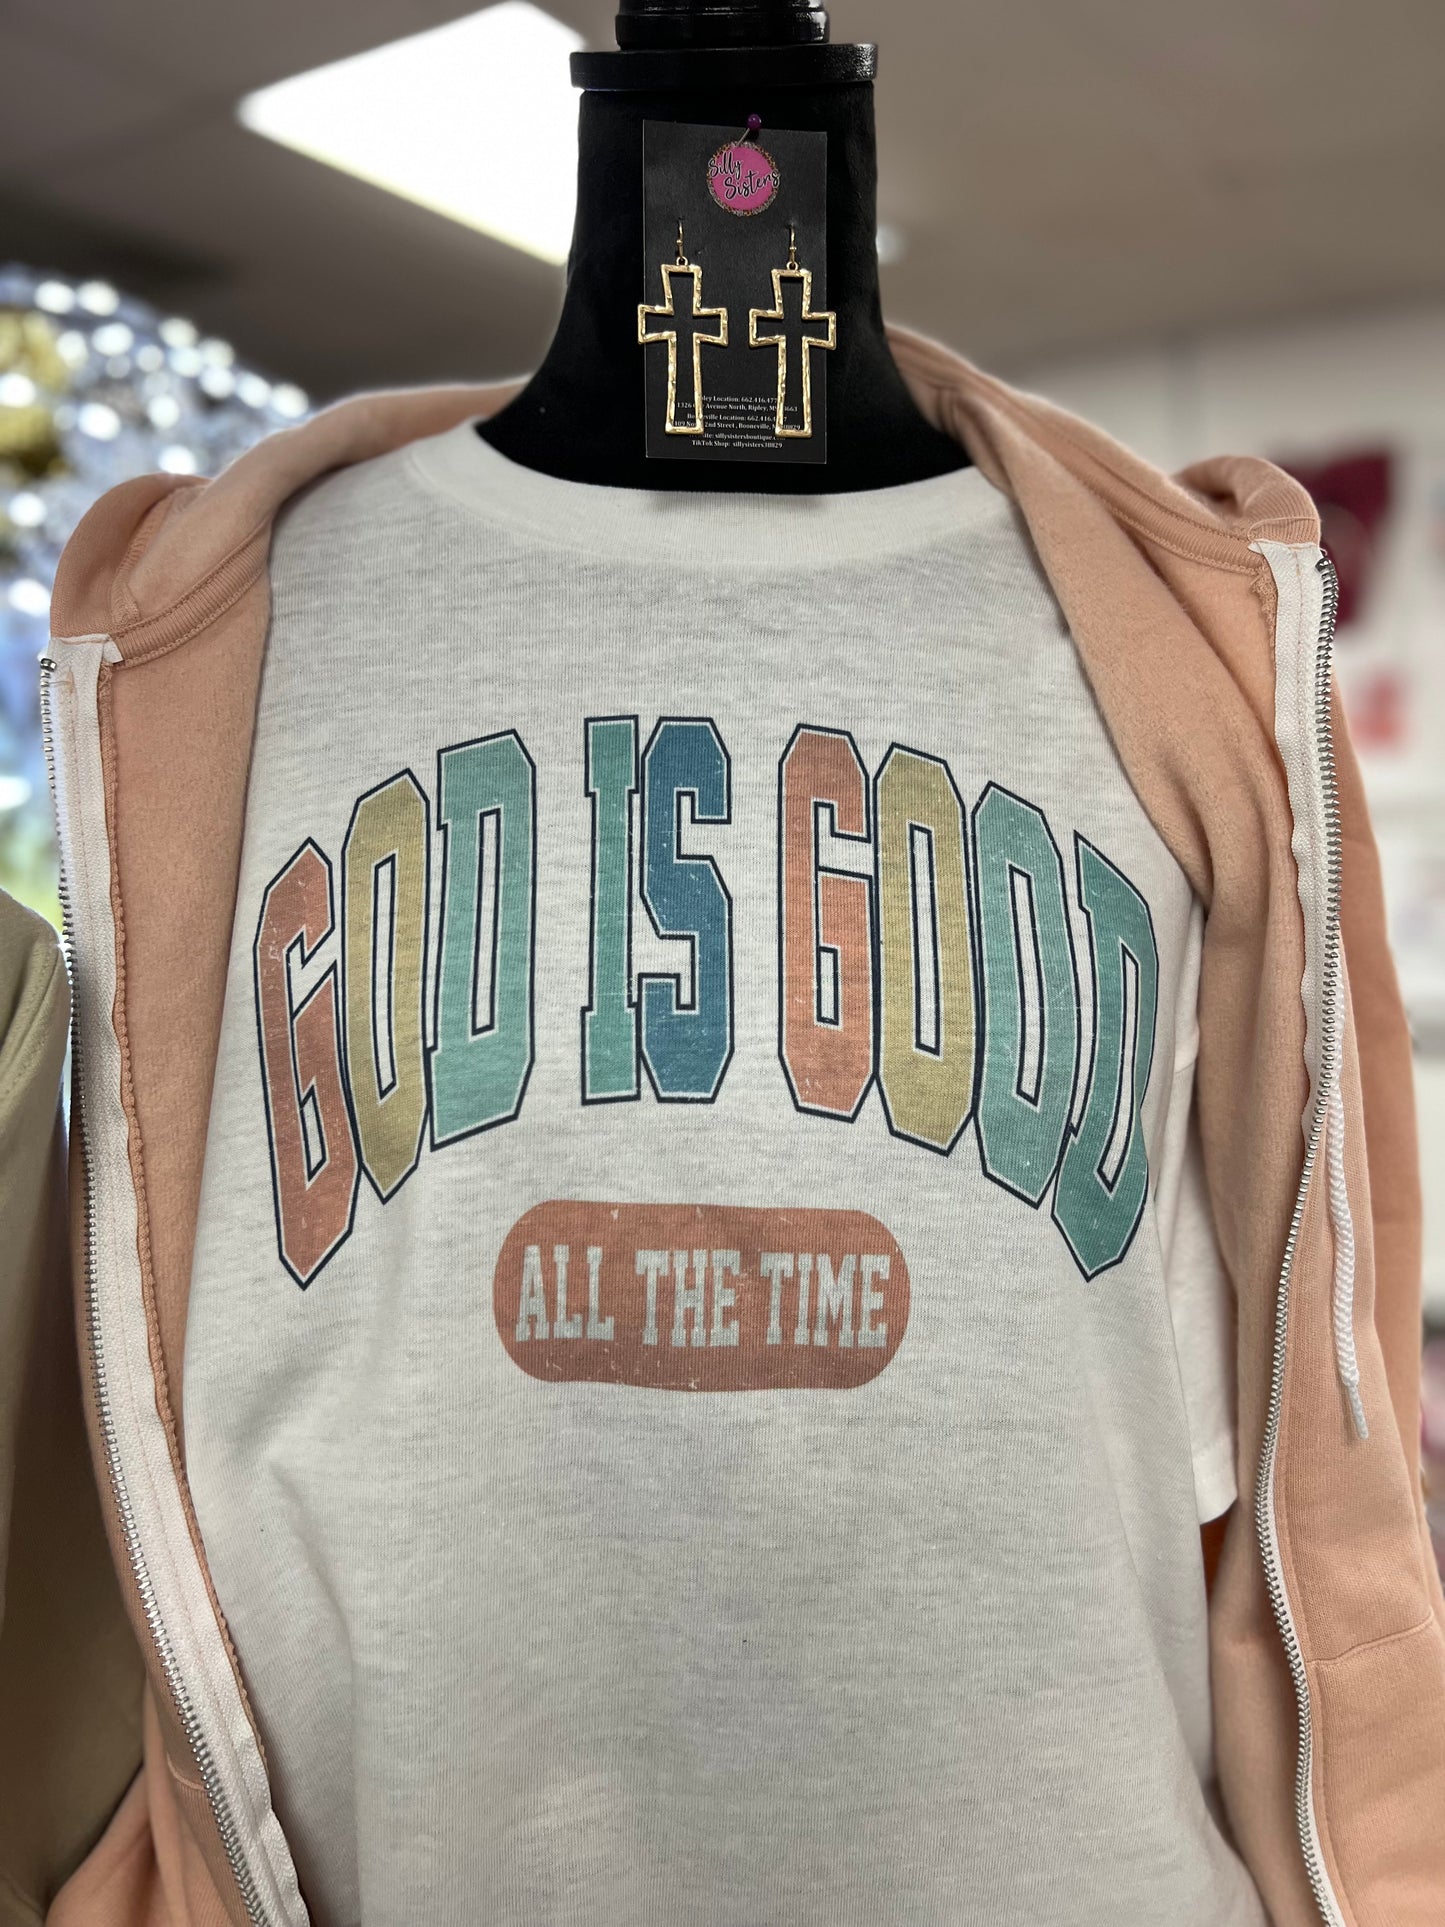 God is good tshirt